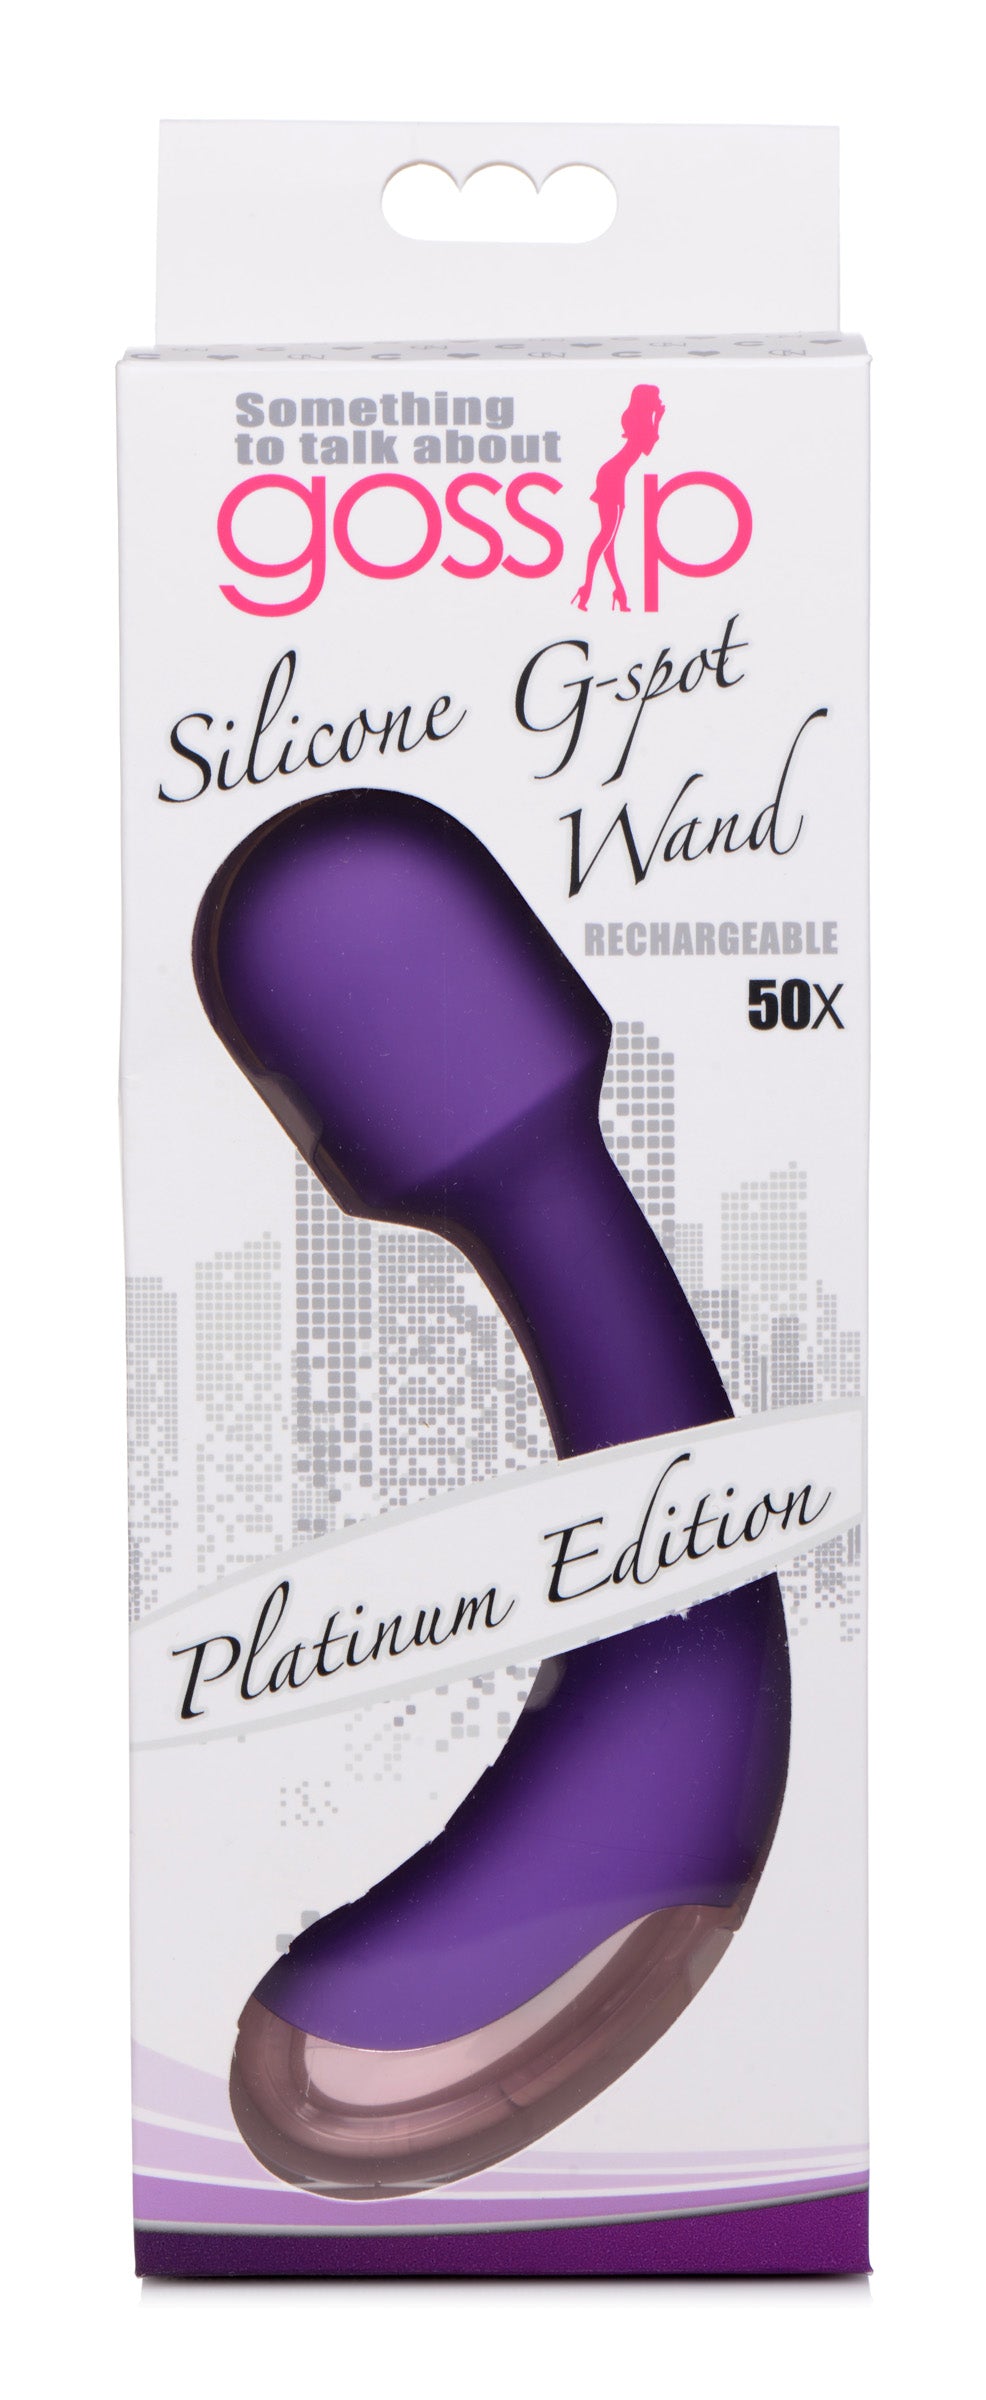 50X Silicone G-spot Wand - Purple - UABDSM